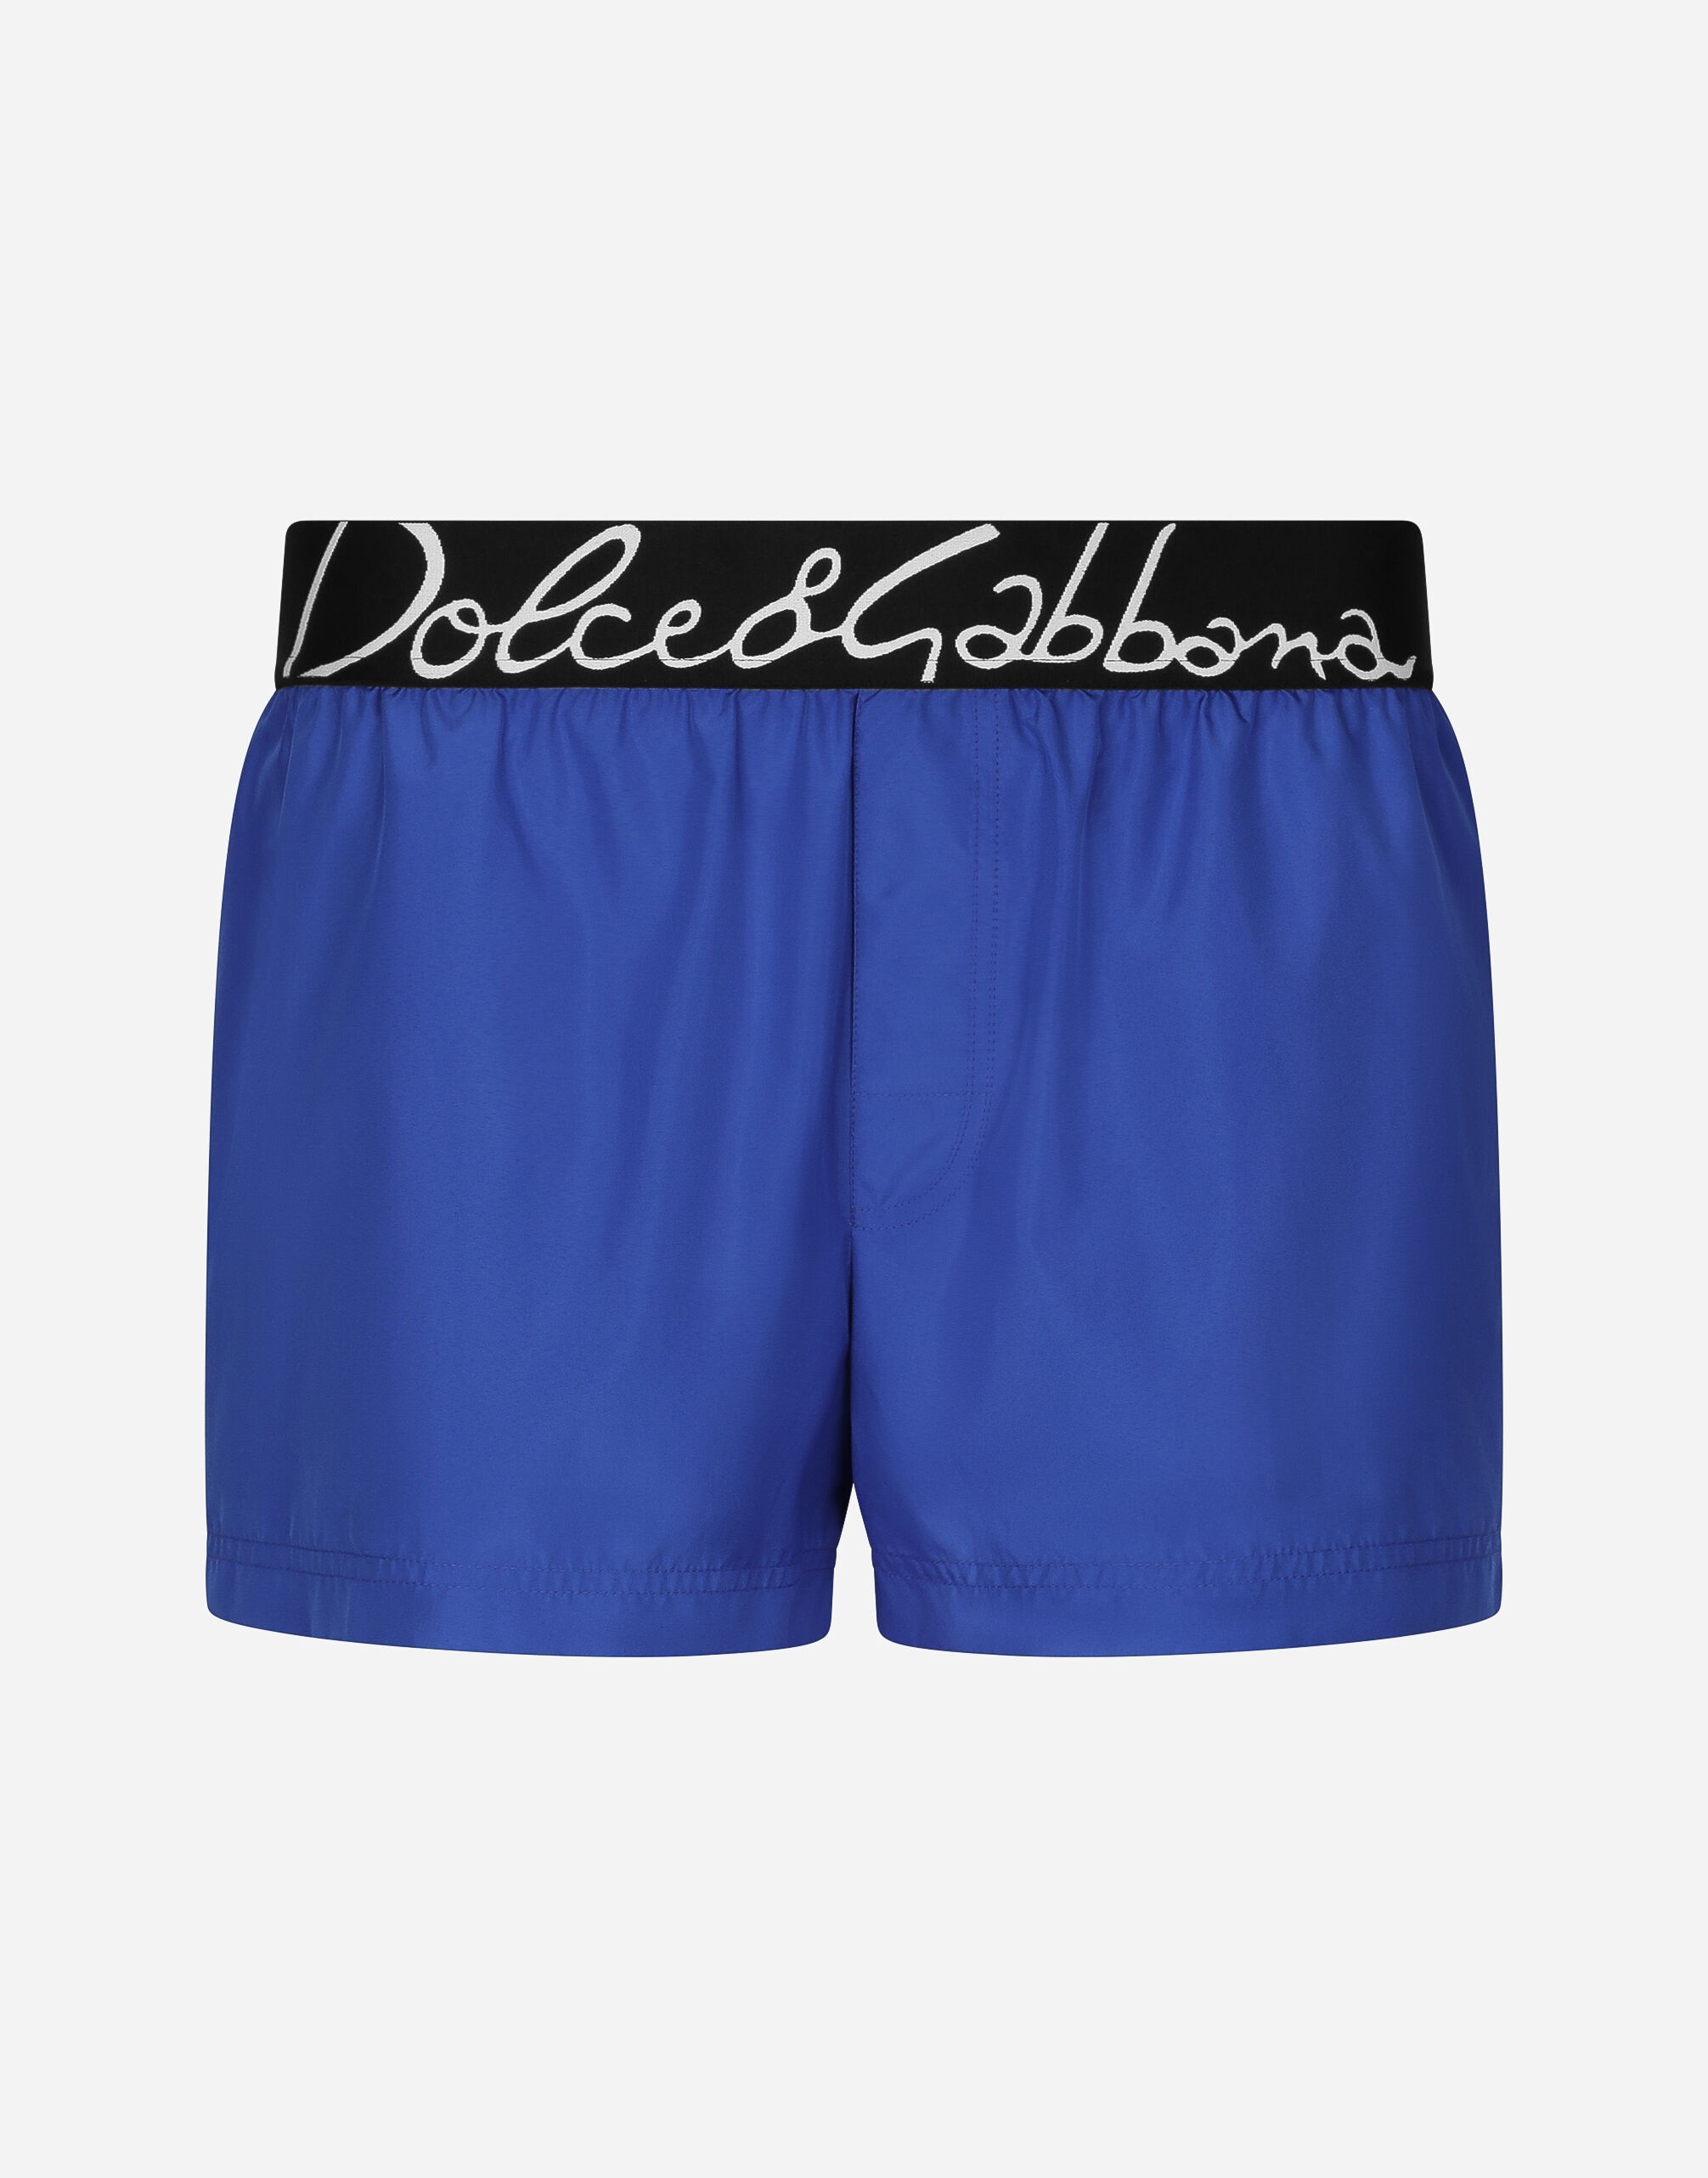 Short swim trunks with Dolce&Gabbana logo - 1